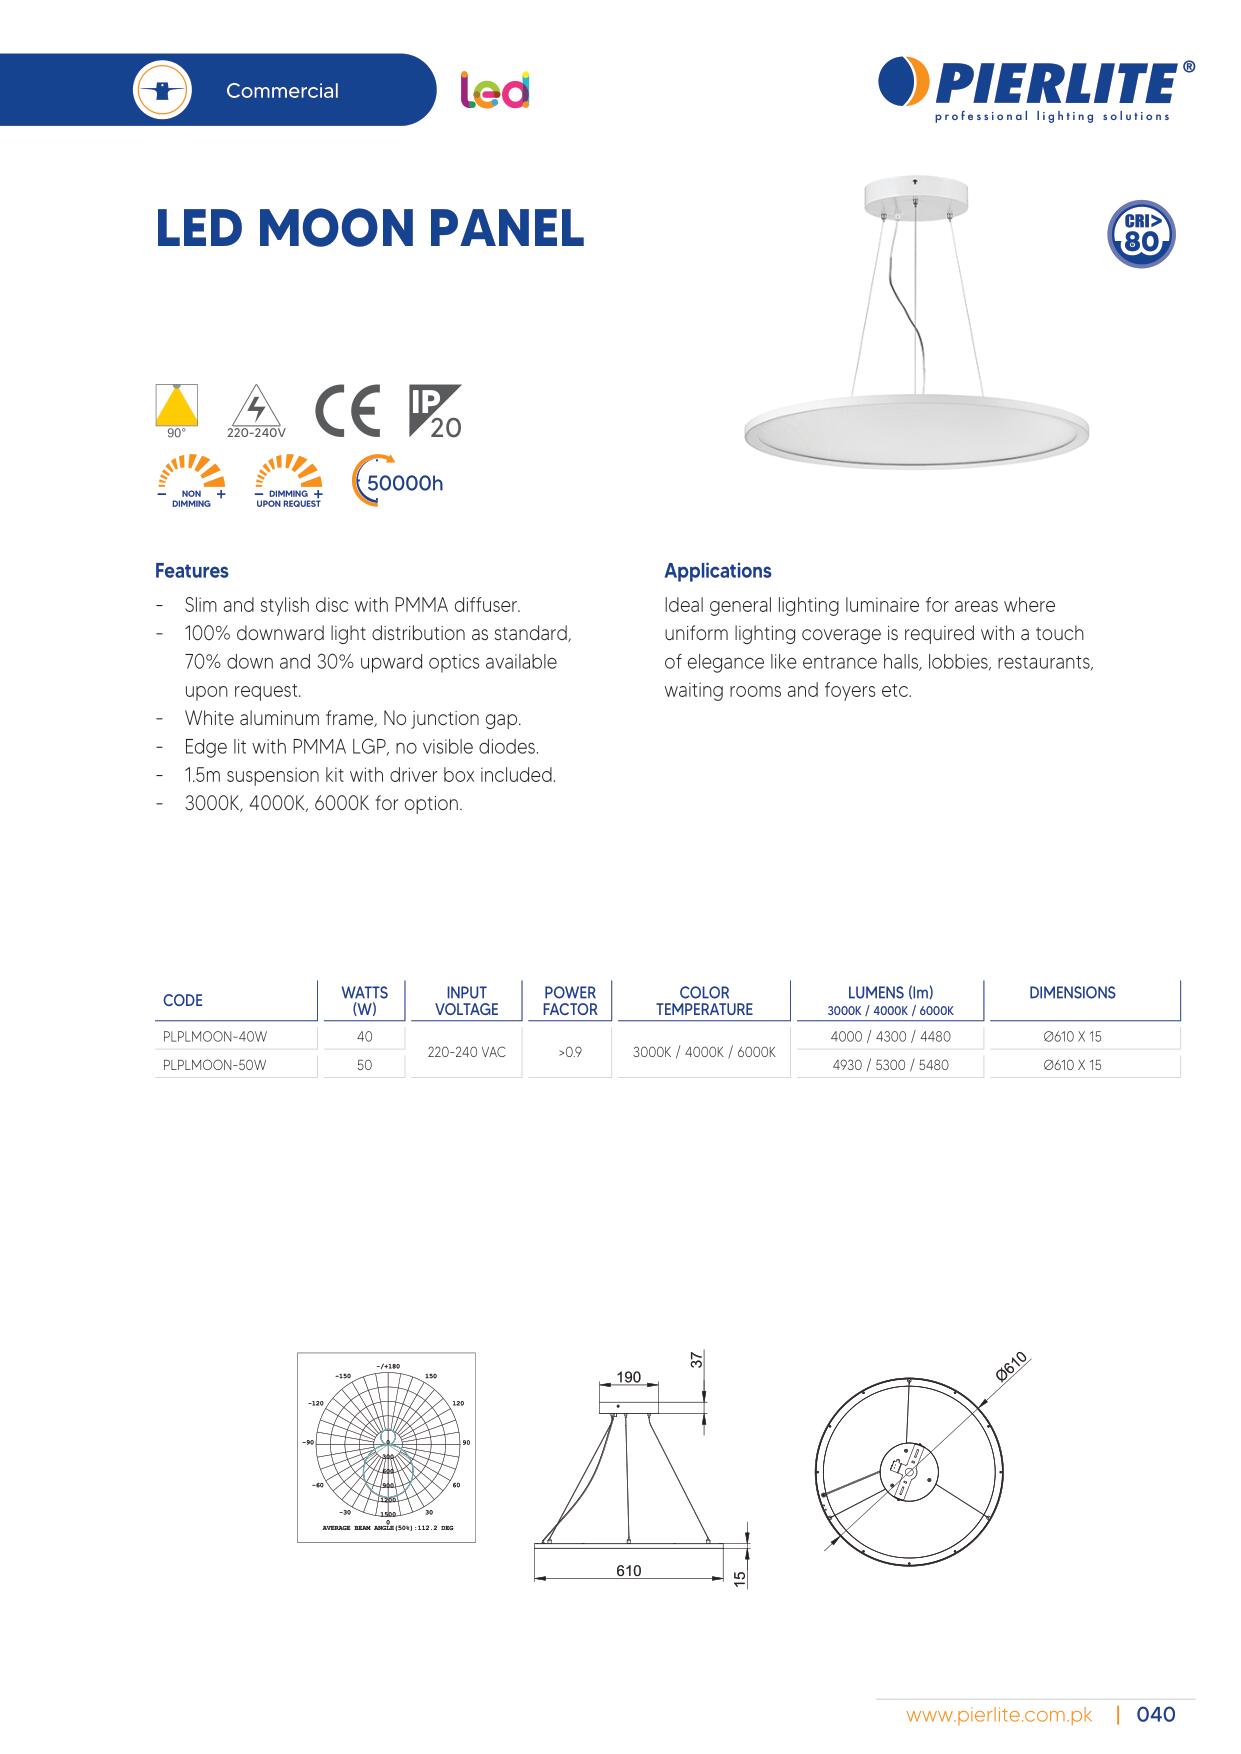 Pierlite LED Luminaire Catalog 2021-49